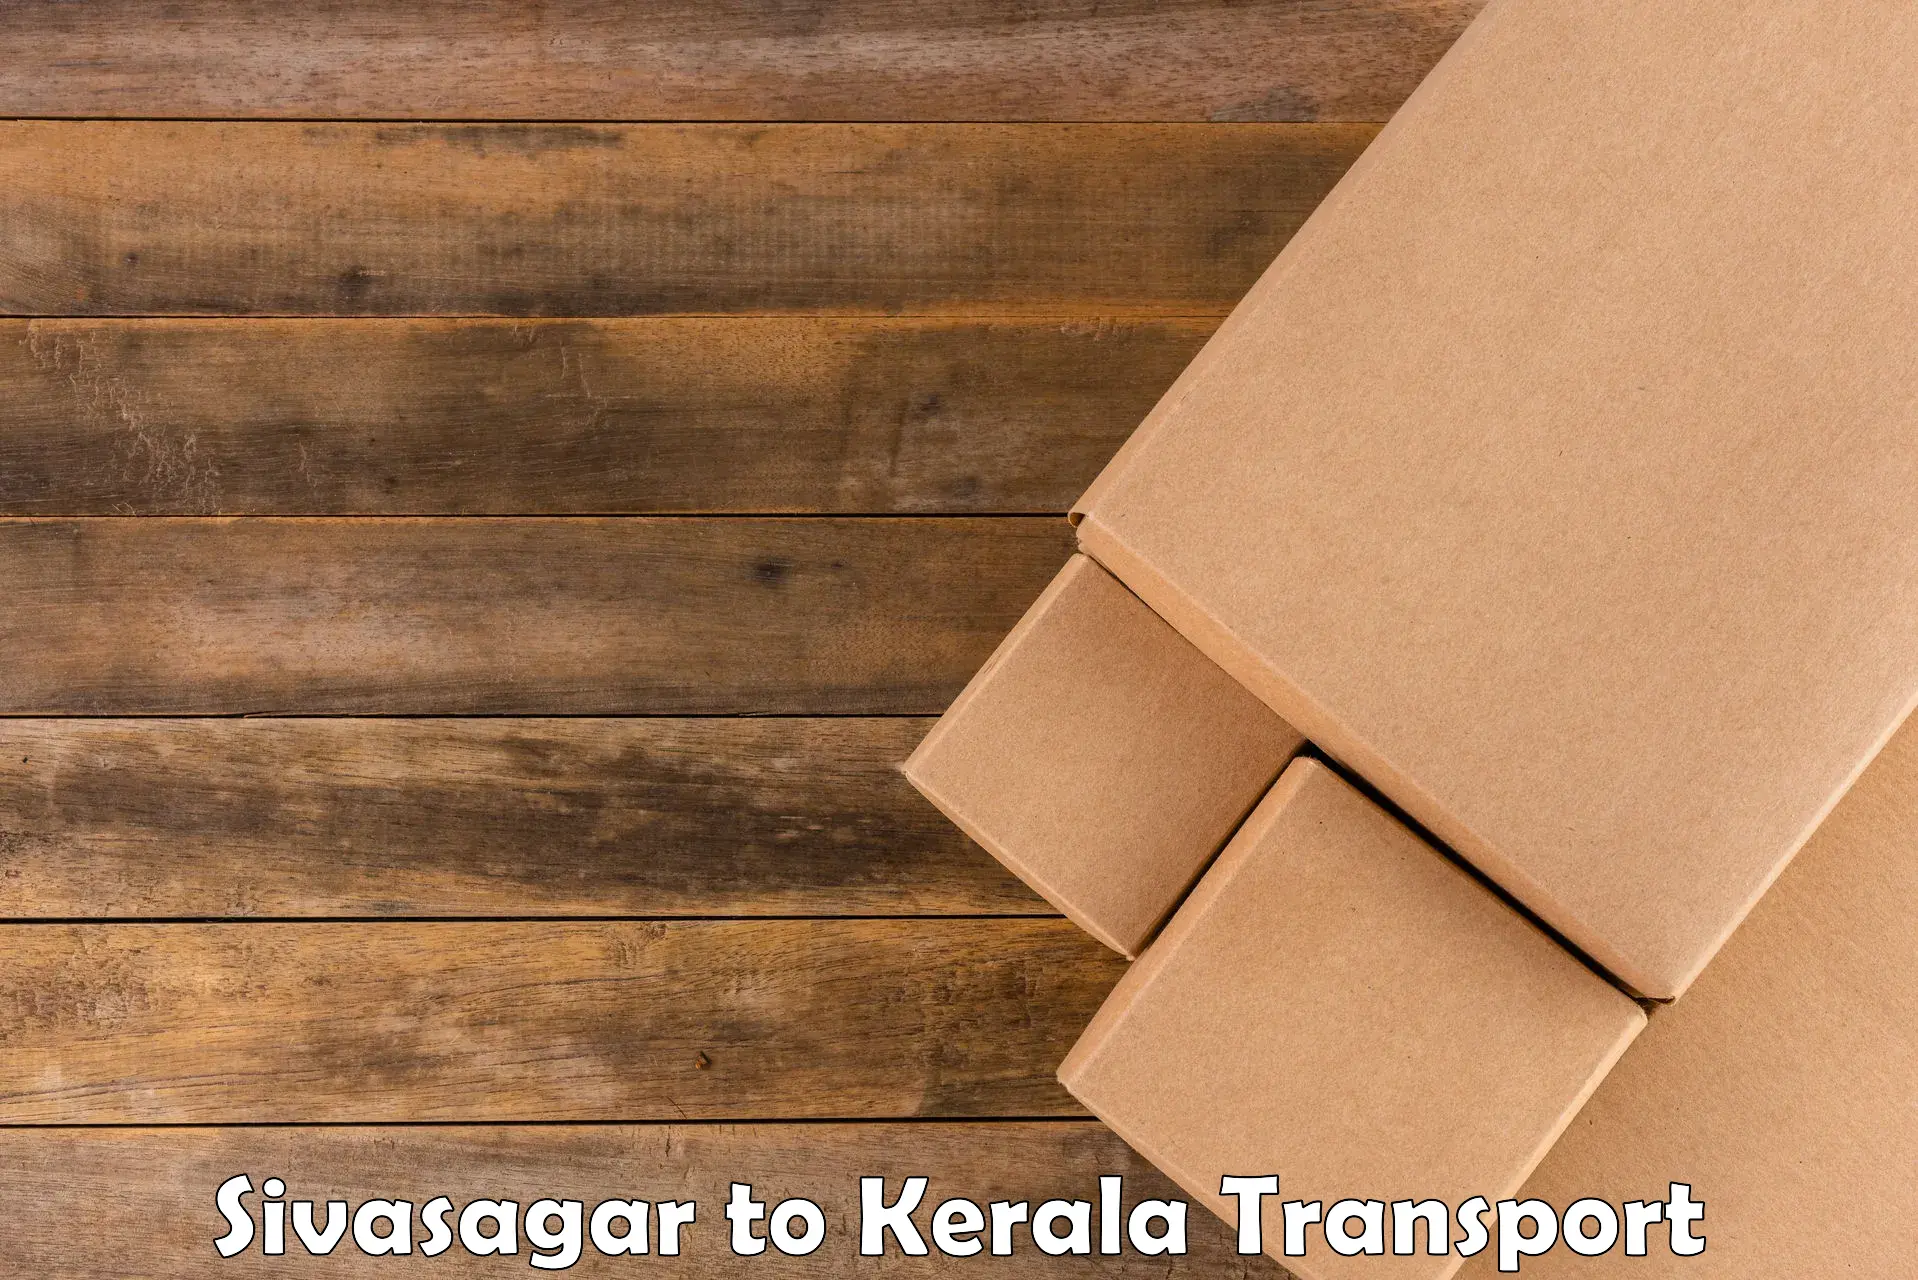 Daily transport service Sivasagar to Mavelikara